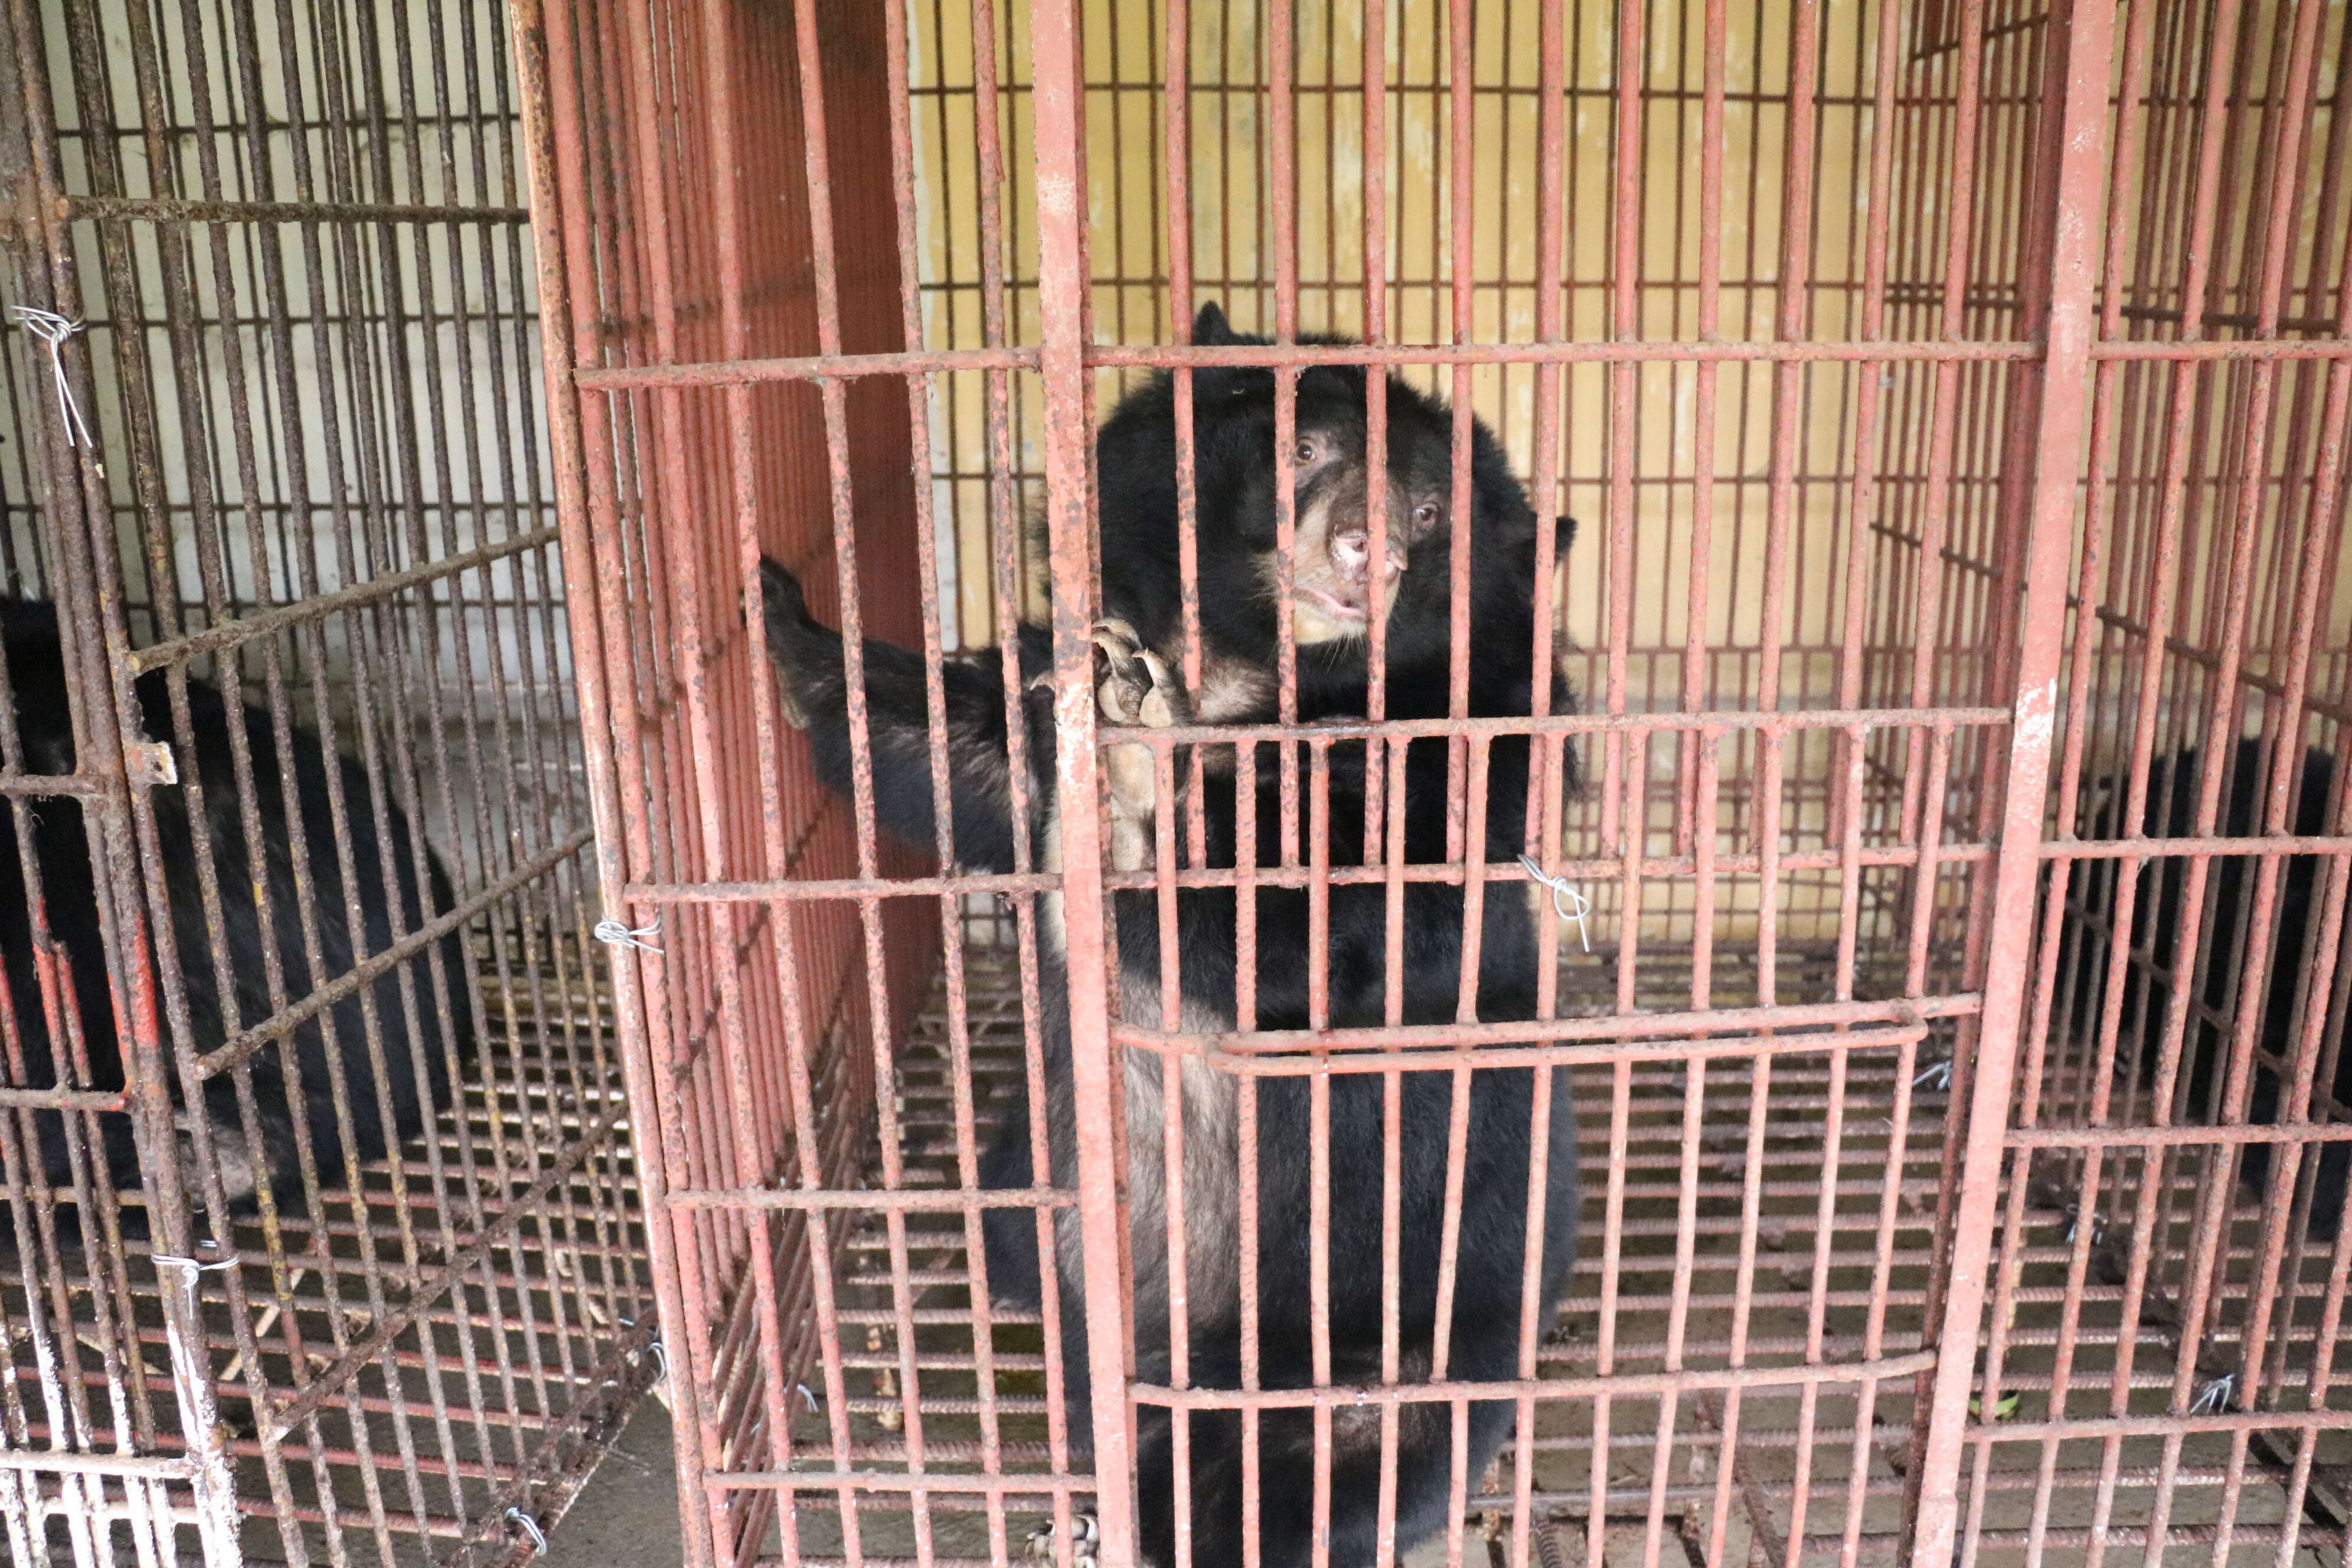 Bear in cage at Vietnam bile farm